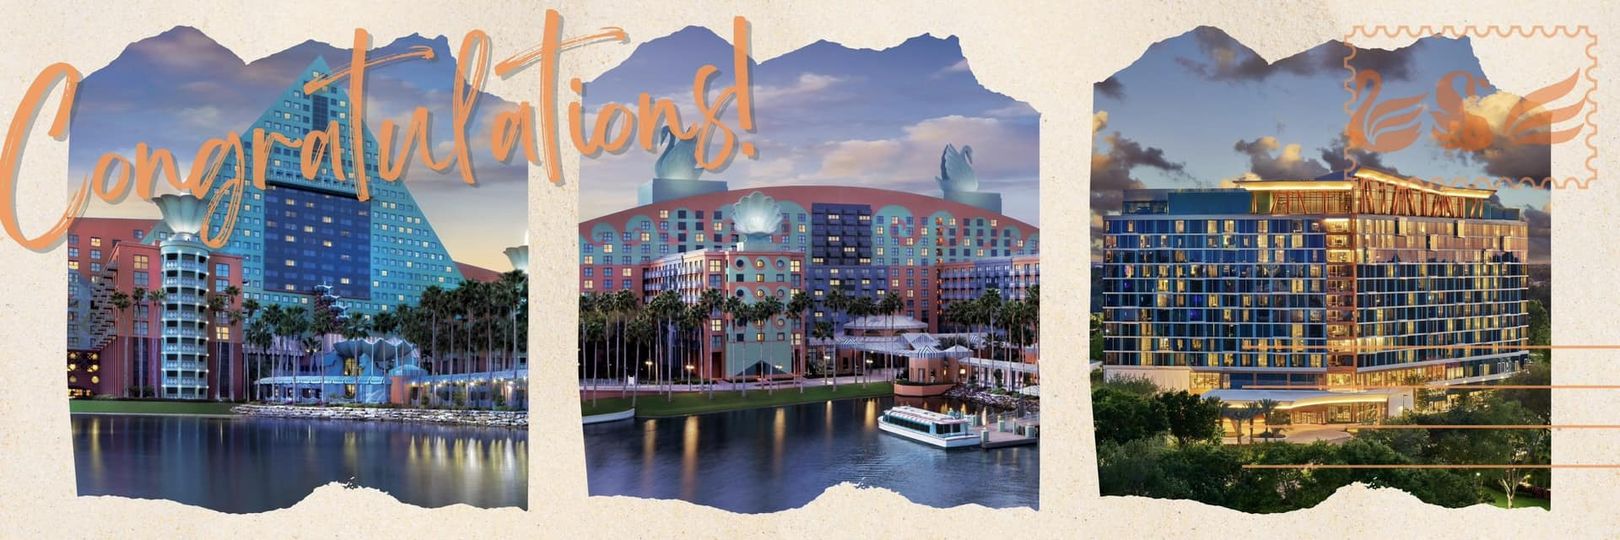 Walt Disney World Swan & Dolphin Resort Voted 'Hotel of the Year' in North America